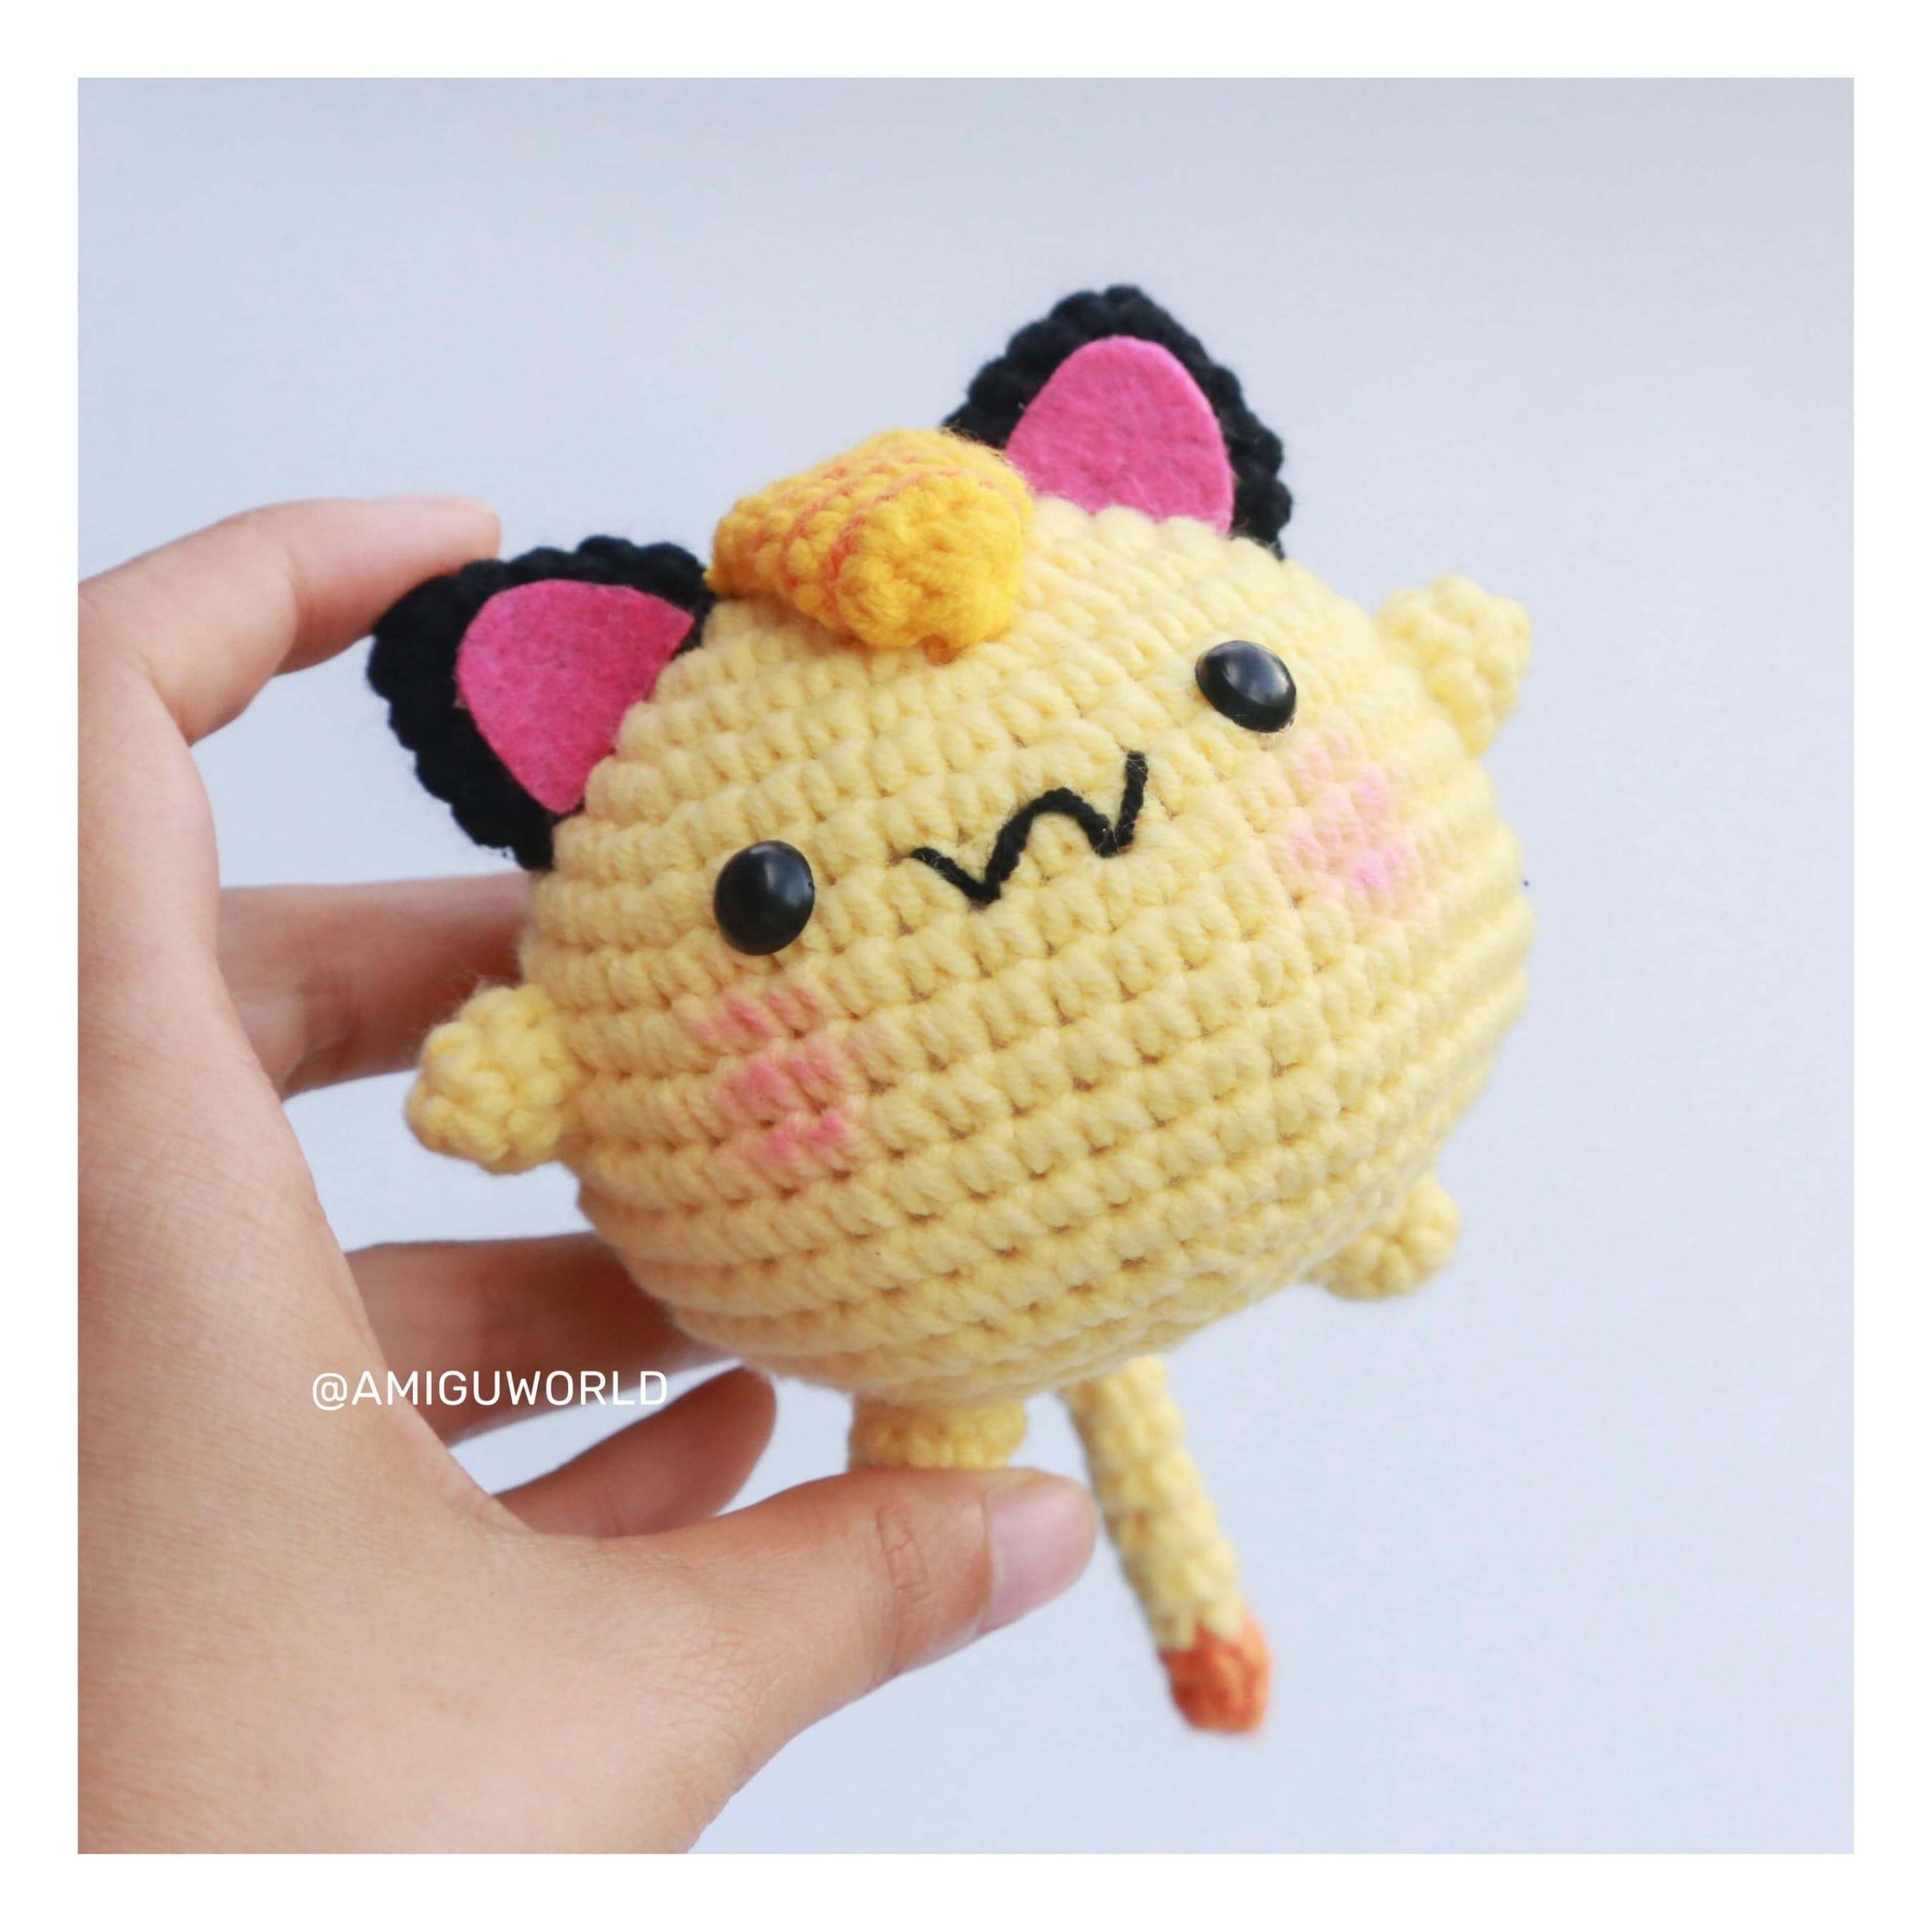 Meowth-amigurumi-crochet-pattern-by-AmiguWorld (8)